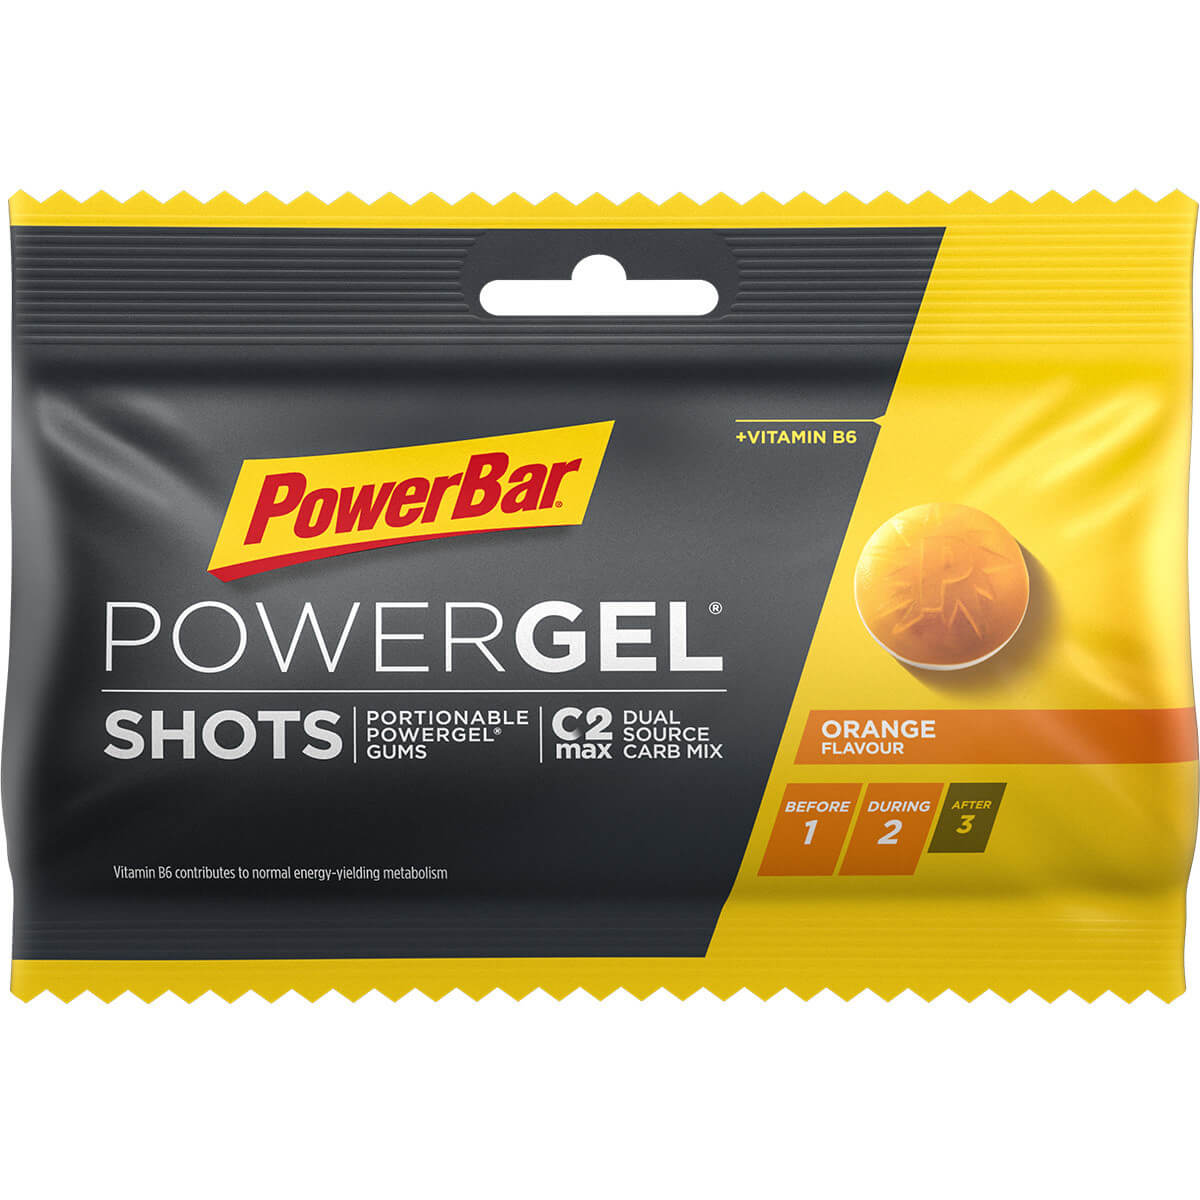 Power Bar PowerGel Shots